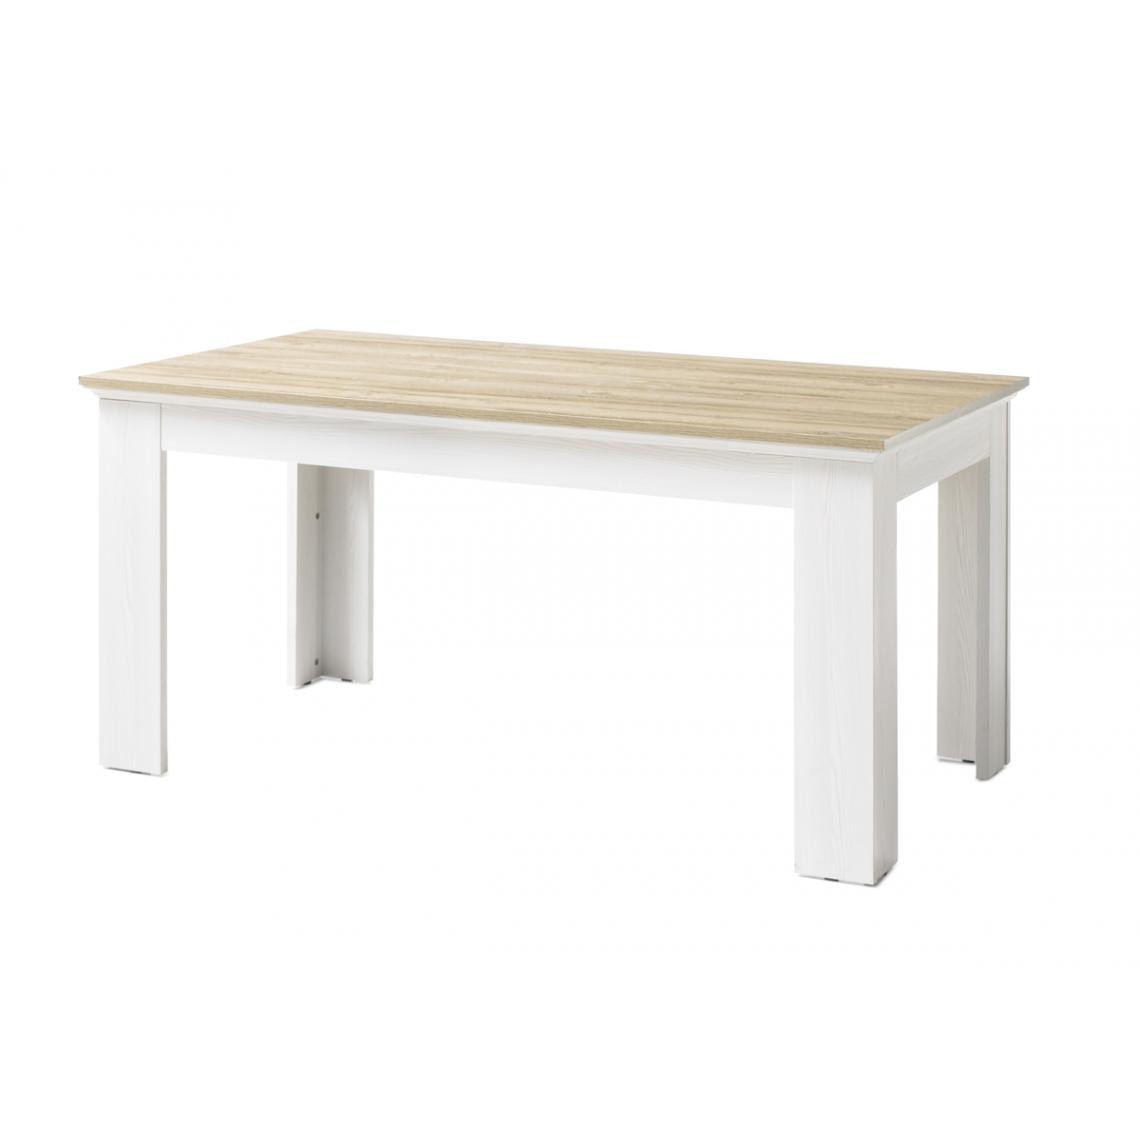 Pegane - Table en chêne coloris blanc - L160 x H76 x P90 cm - Tables à manger